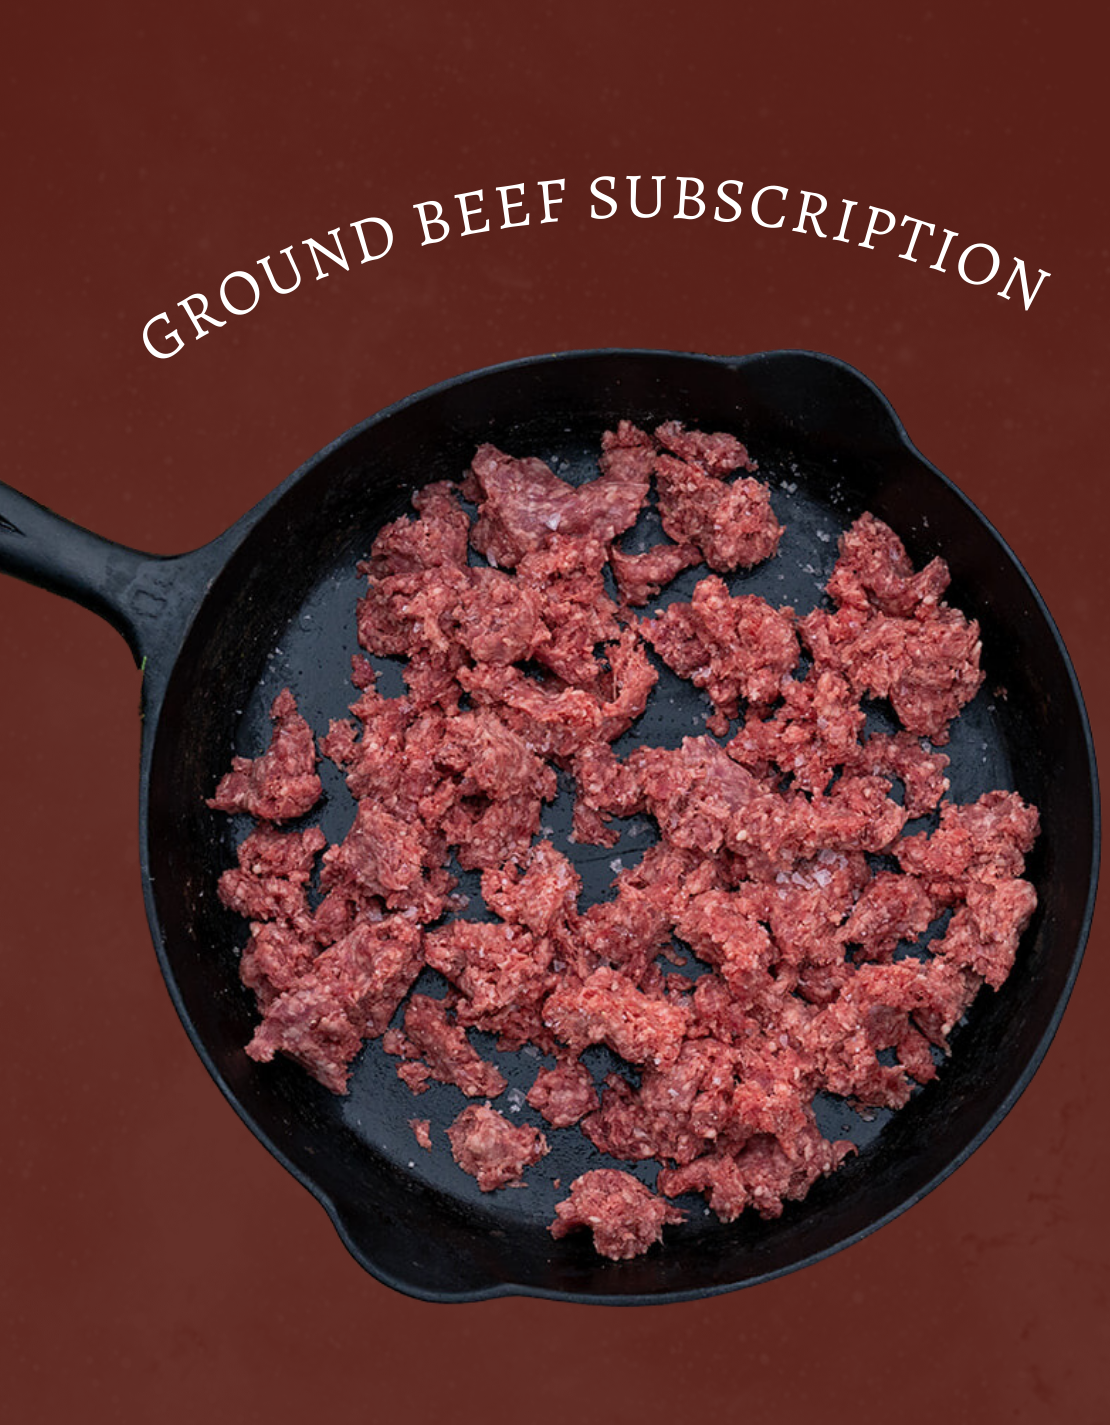 Farm Club Ground Beef Subscription